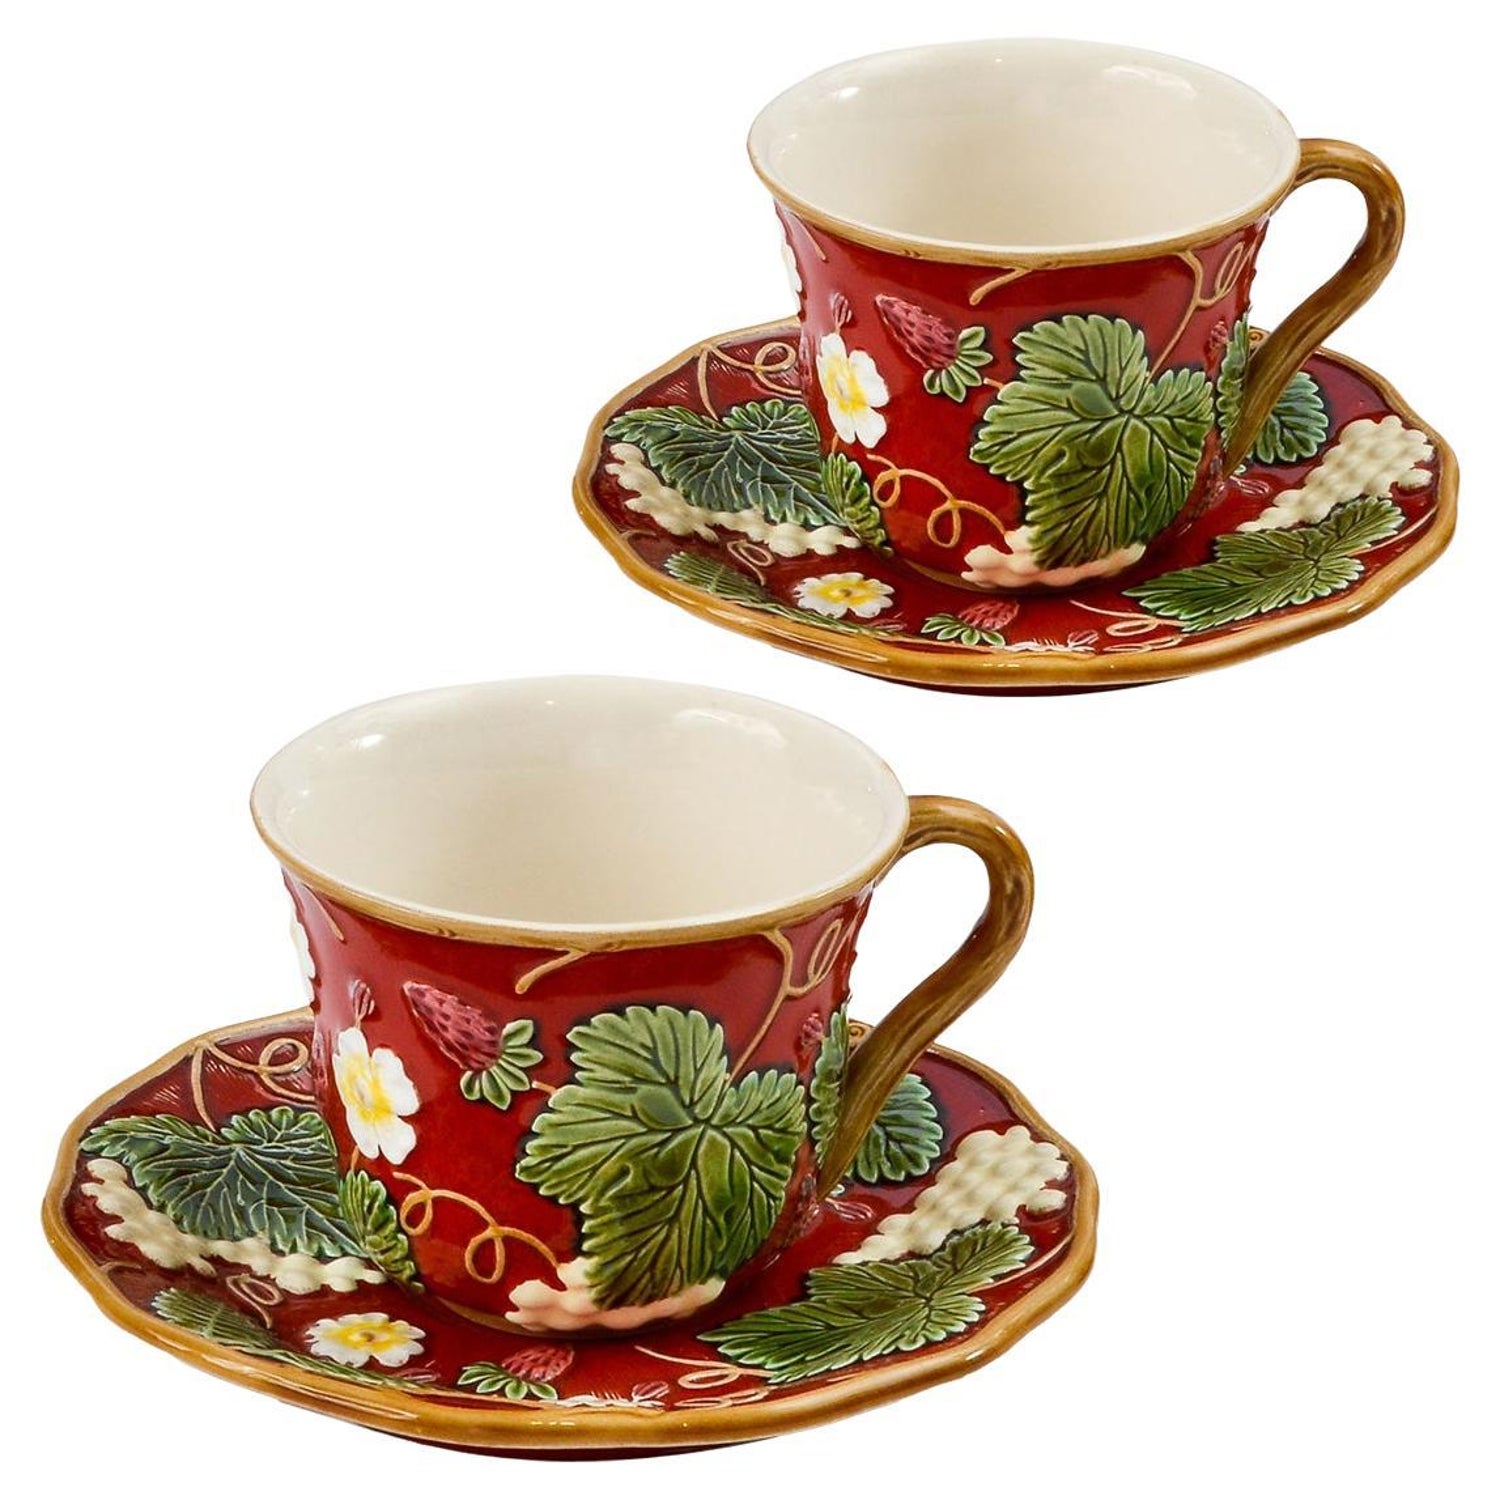 https://a.1stdibscdn.com/flowery-tea-cups-for-2-george-sand-for-sale/f_46941/f_287611521653144288047/f_28761152_1653144288461_bg_processed.jpg?width=1500